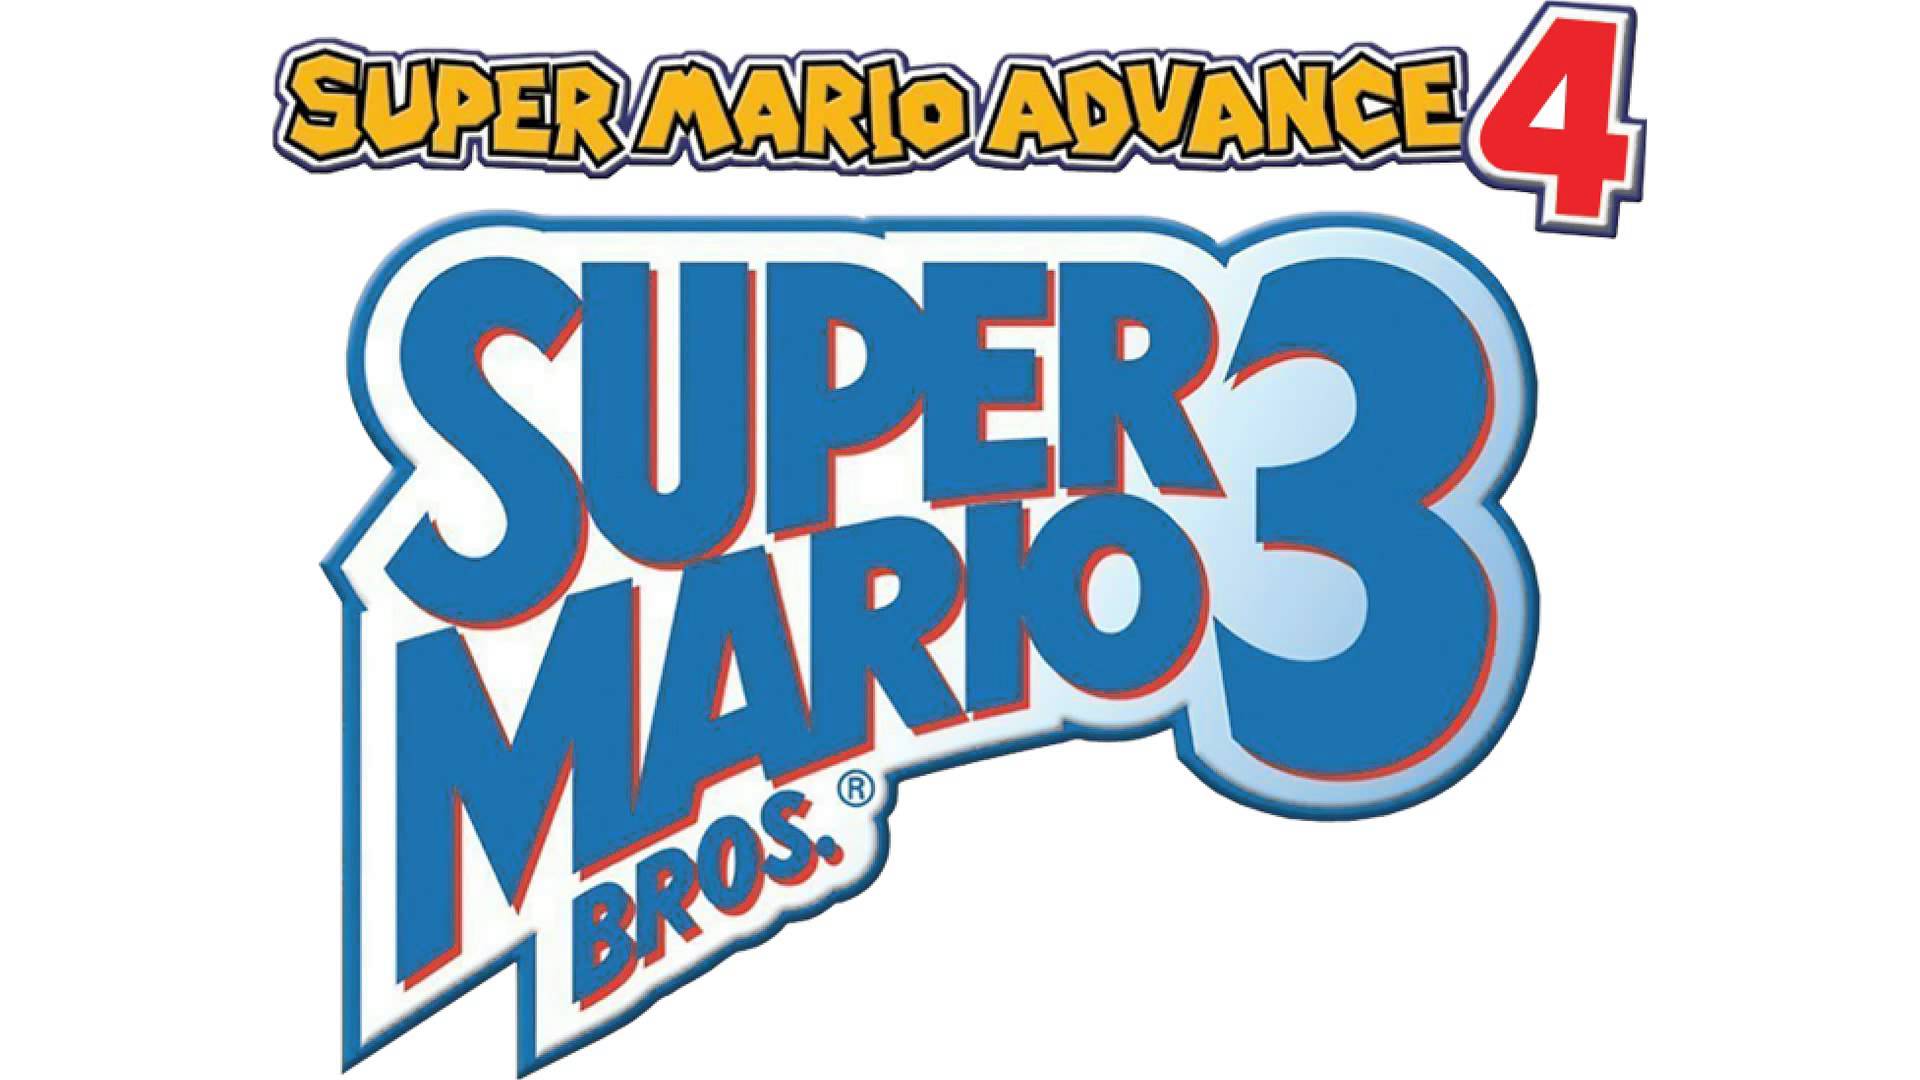 Super Mario Advance 4 - Super Mario Bros. 3 Backgrounds on Wallpapers Vista